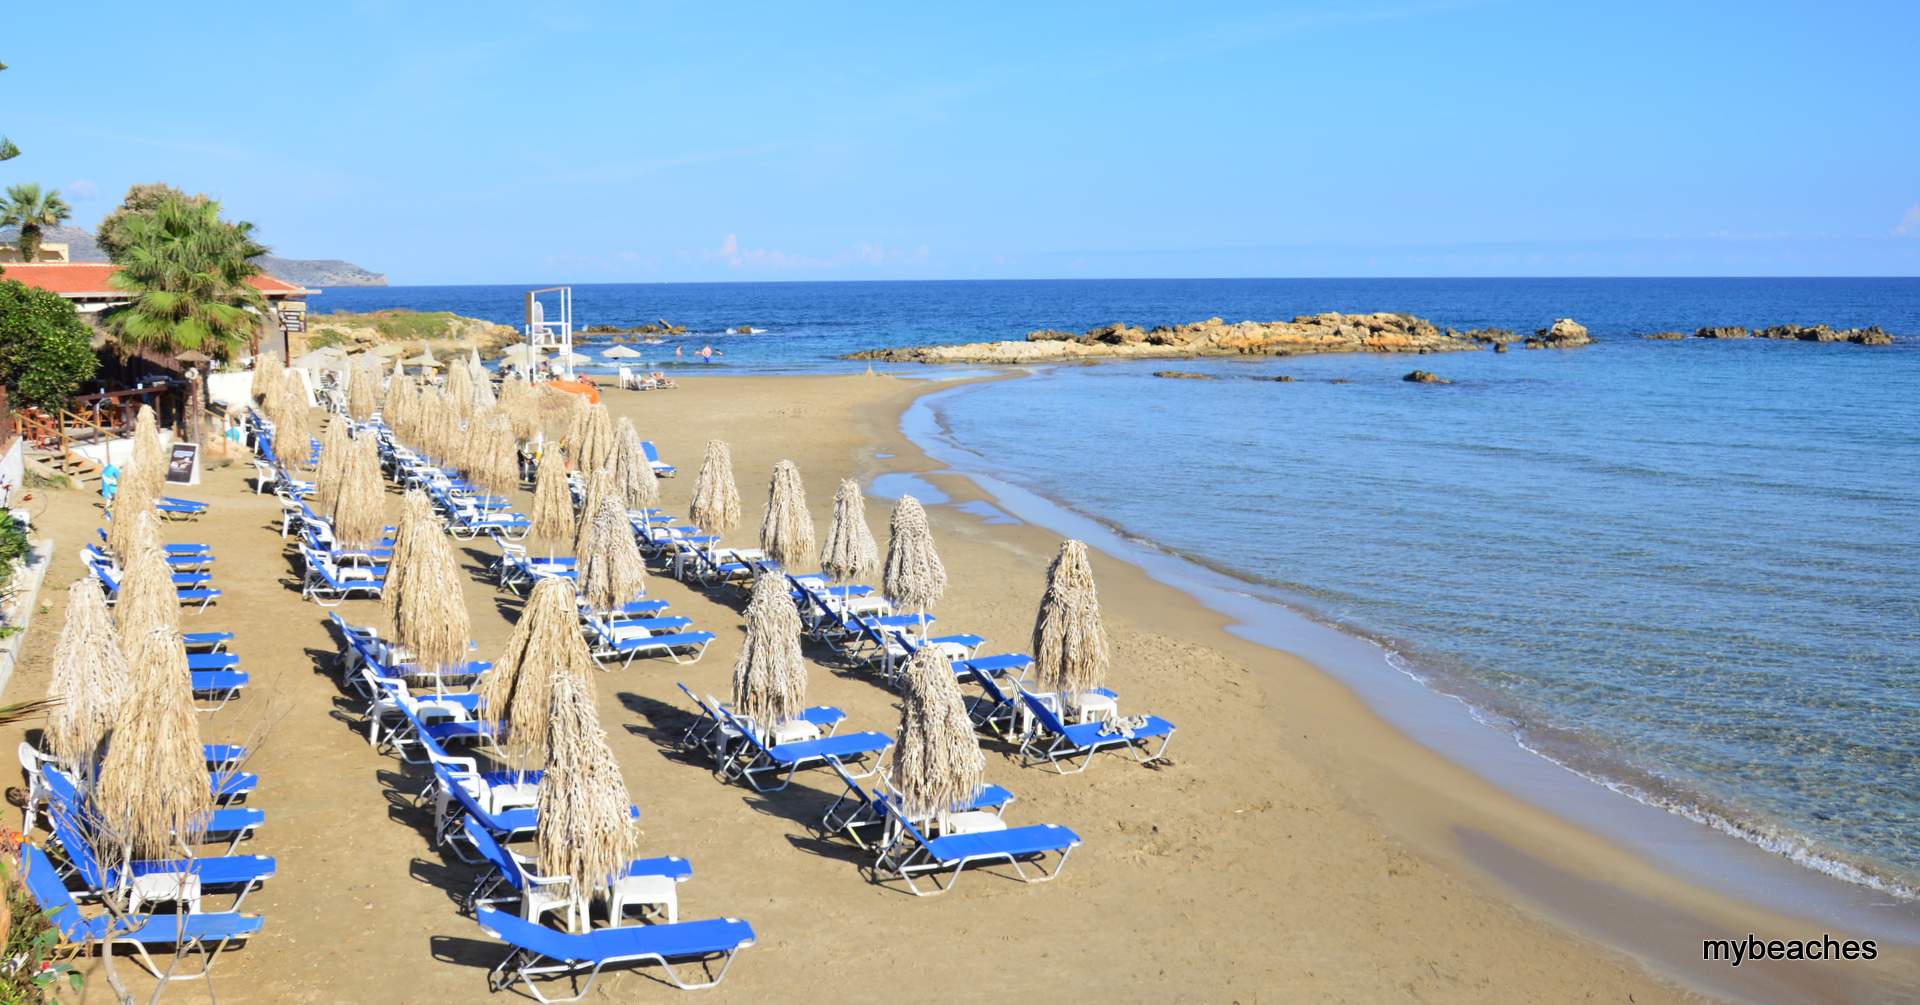 Kalamaki beach, Hania, Crete, Greece